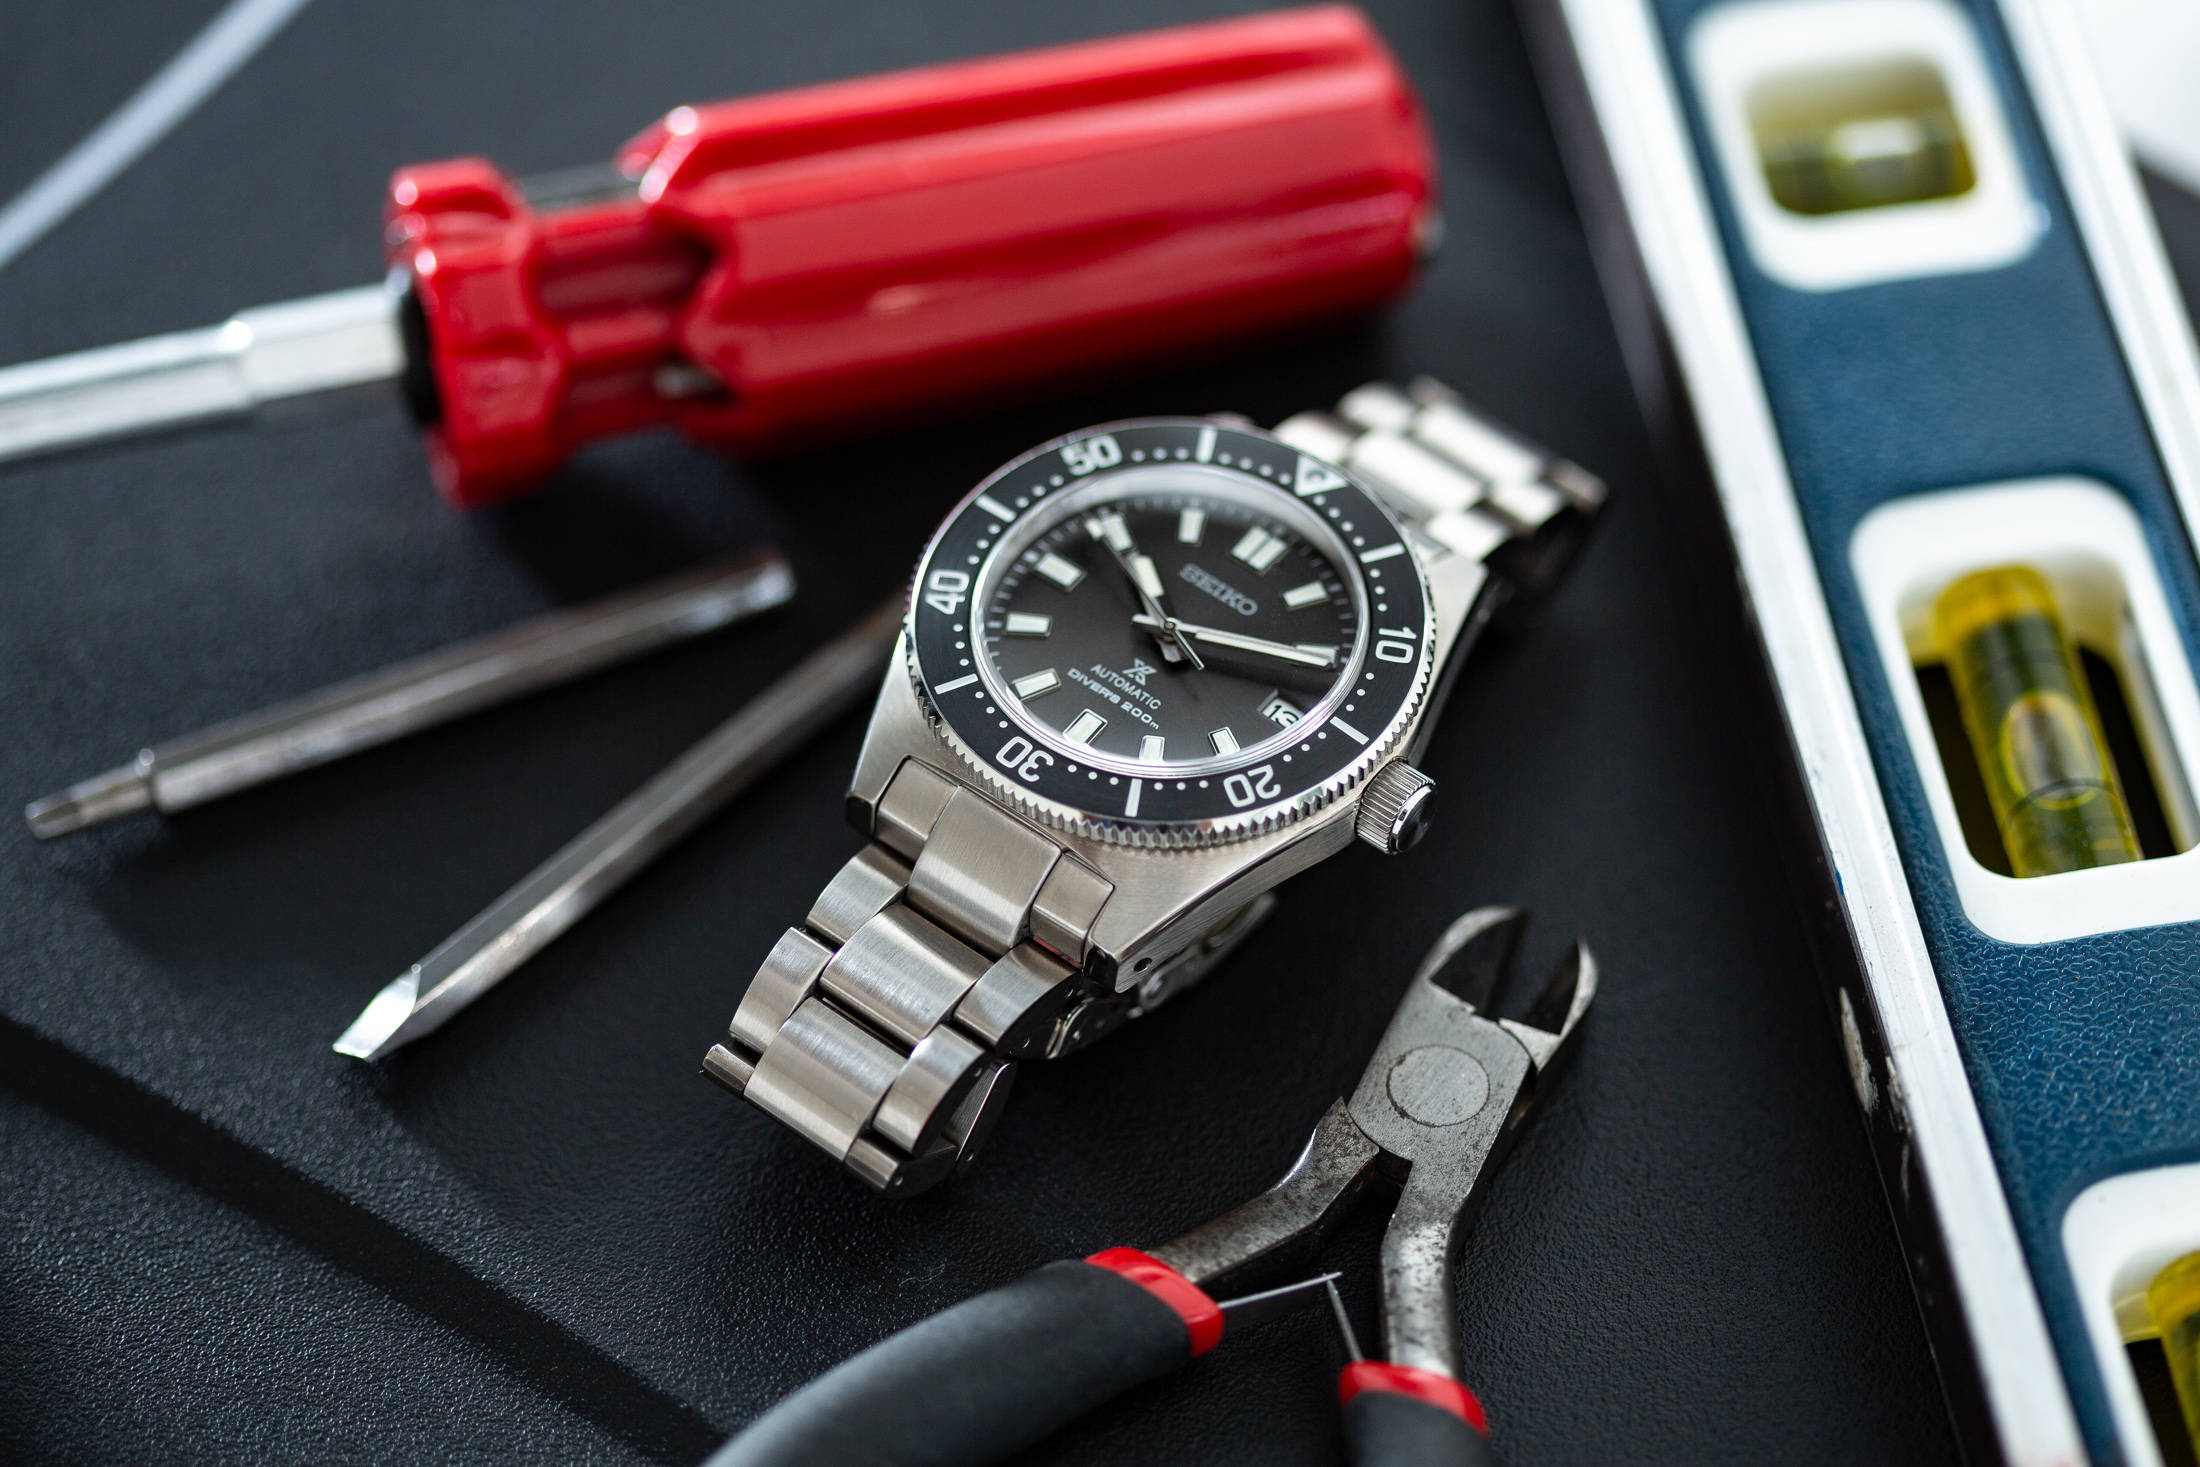 Watch Repair Kit, Professional Watch Repair Tool, Watch Battery Replacement  Too | eBay